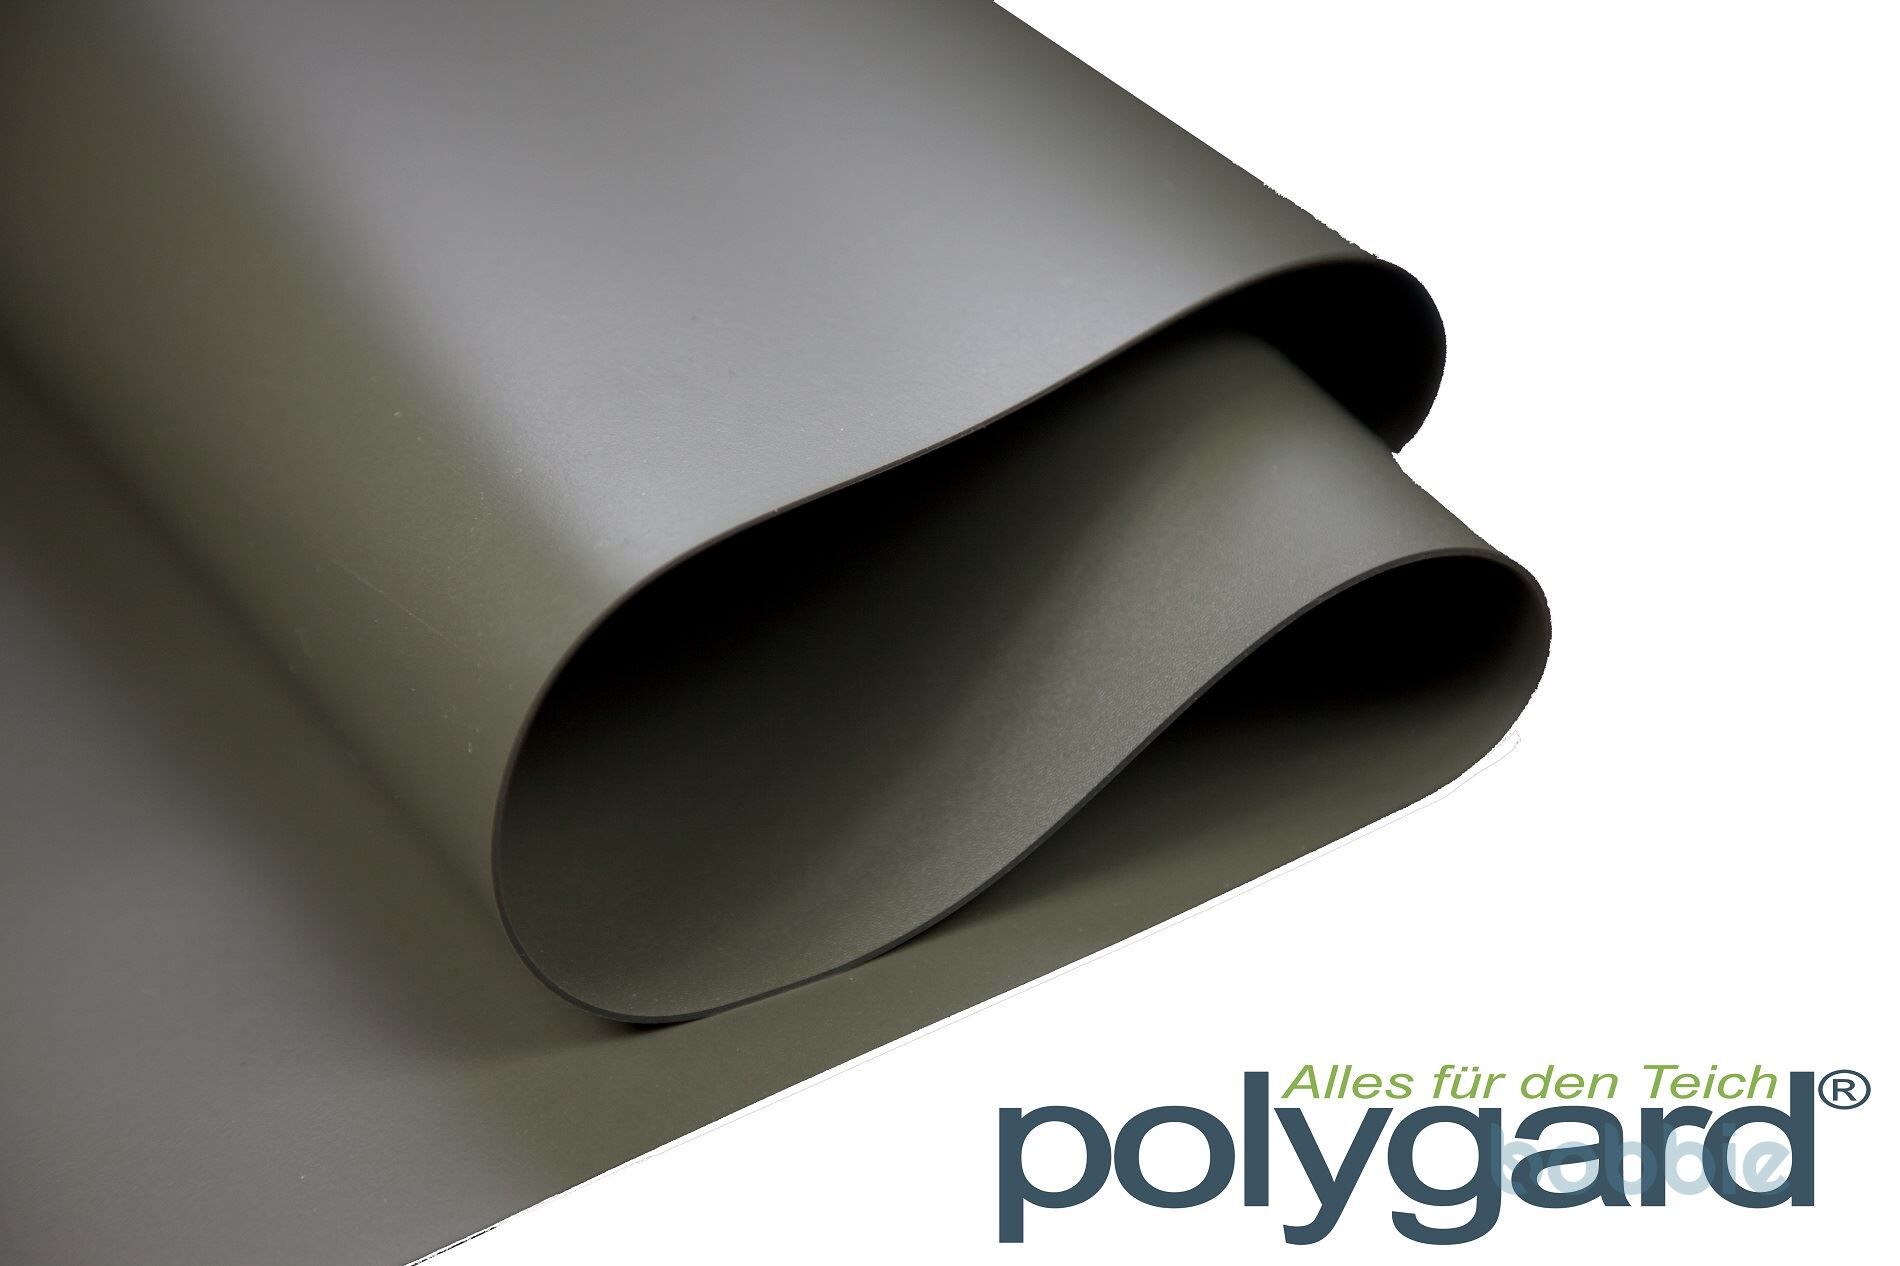 Polygard PVC Teichfolie 1,5mm oliv-grün PrePack - 6,0 x 7,5 m